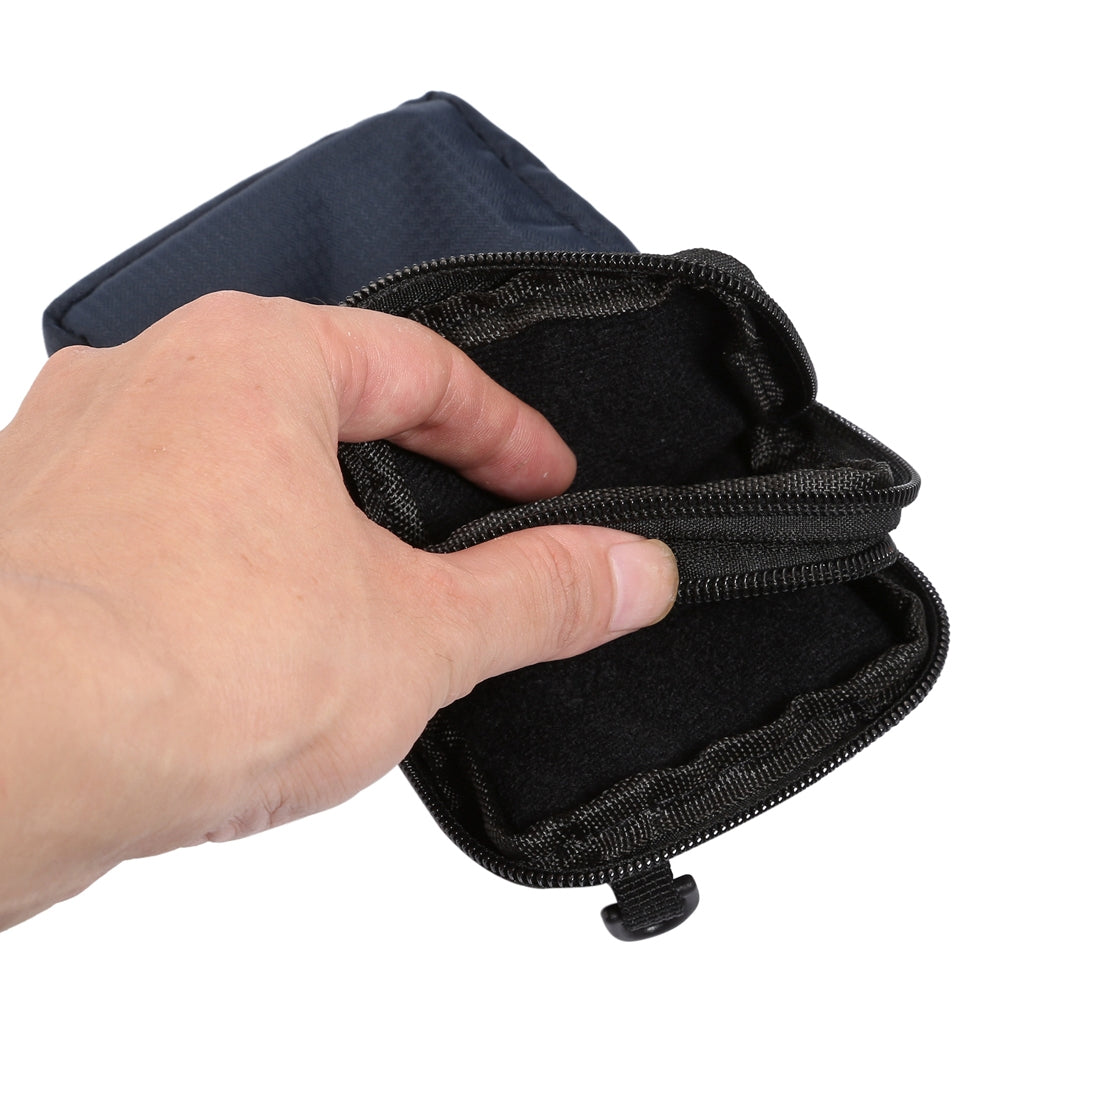 Universal Multi-function Double Layer Zipper Sports Waist Bag - 6.9 Inch